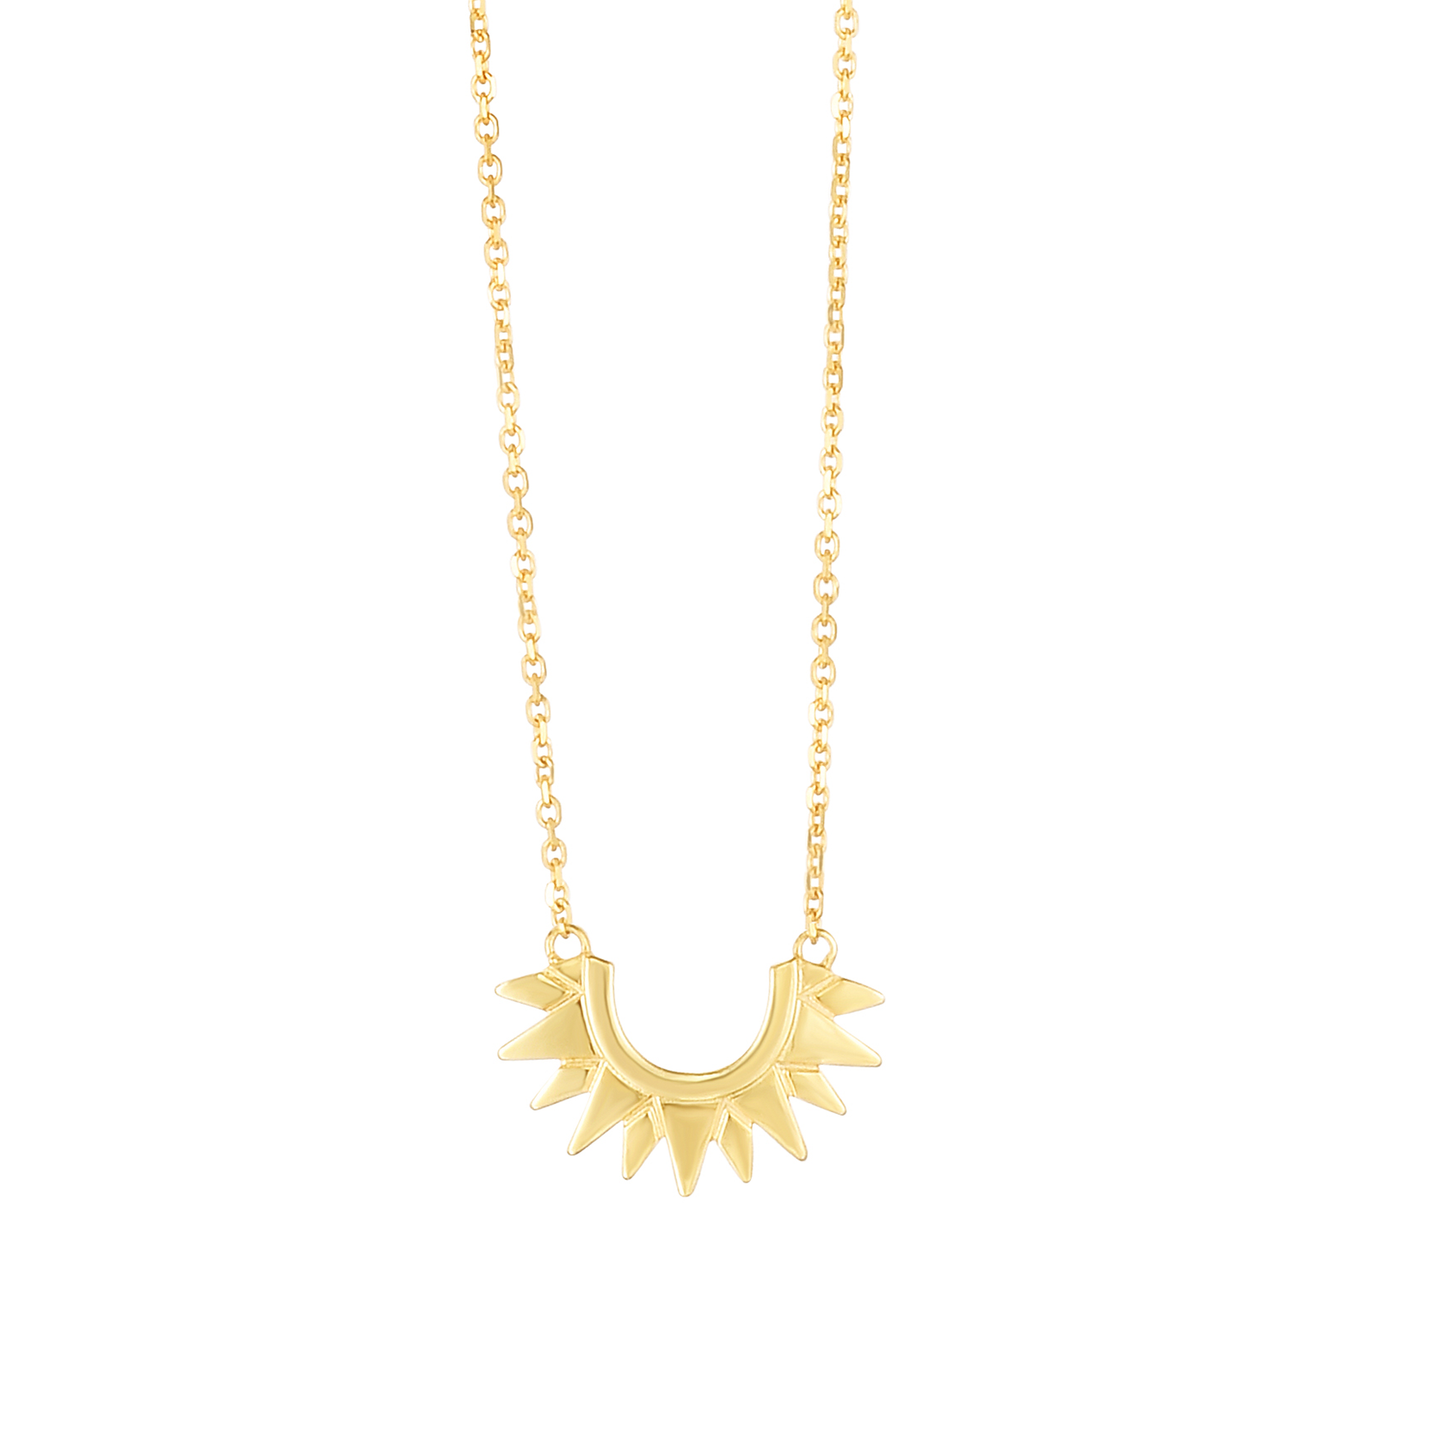 14K Gold and Diamonds Sunburst Charm Pendant Necklace